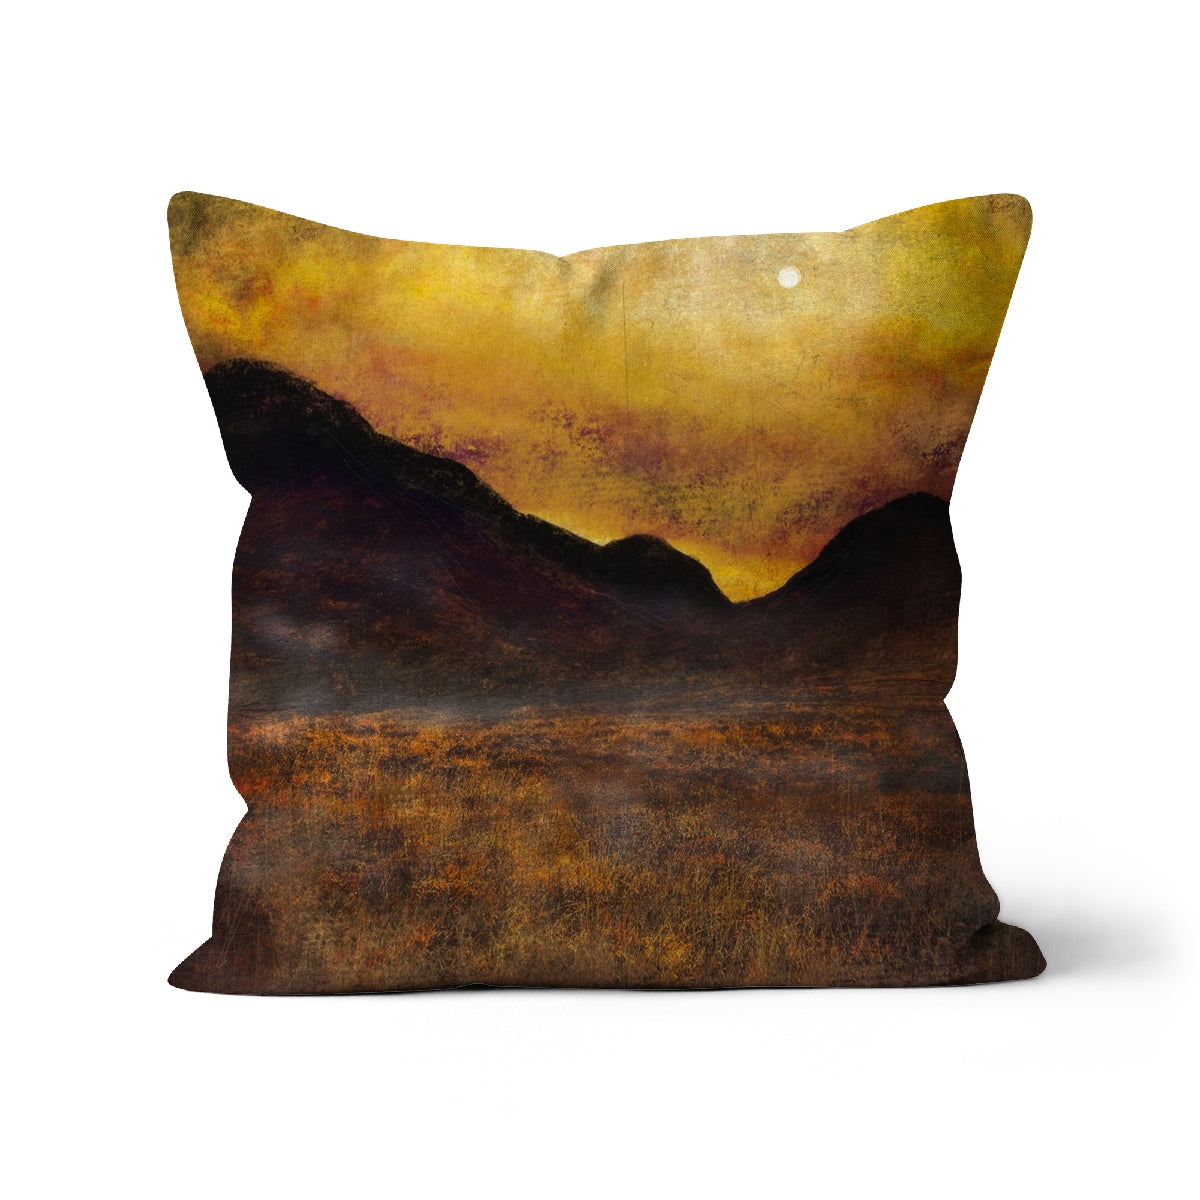 Glencoe Moonlight Art Gifts Cushion-Cushions-Glencoe Art Gallery-Canvas-16"x16"-Paintings, Prints, Homeware, Art Gifts From Scotland By Scottish Artist Kevin Hunter